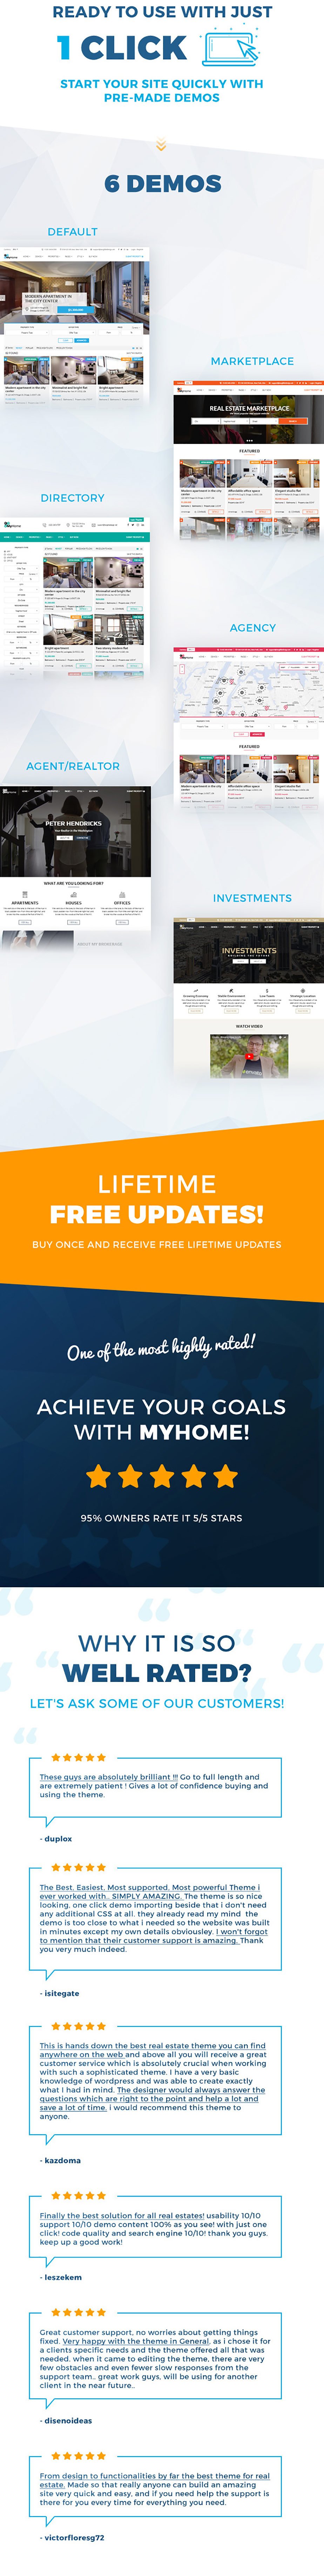 MyHome Real Estate WordPress - 4